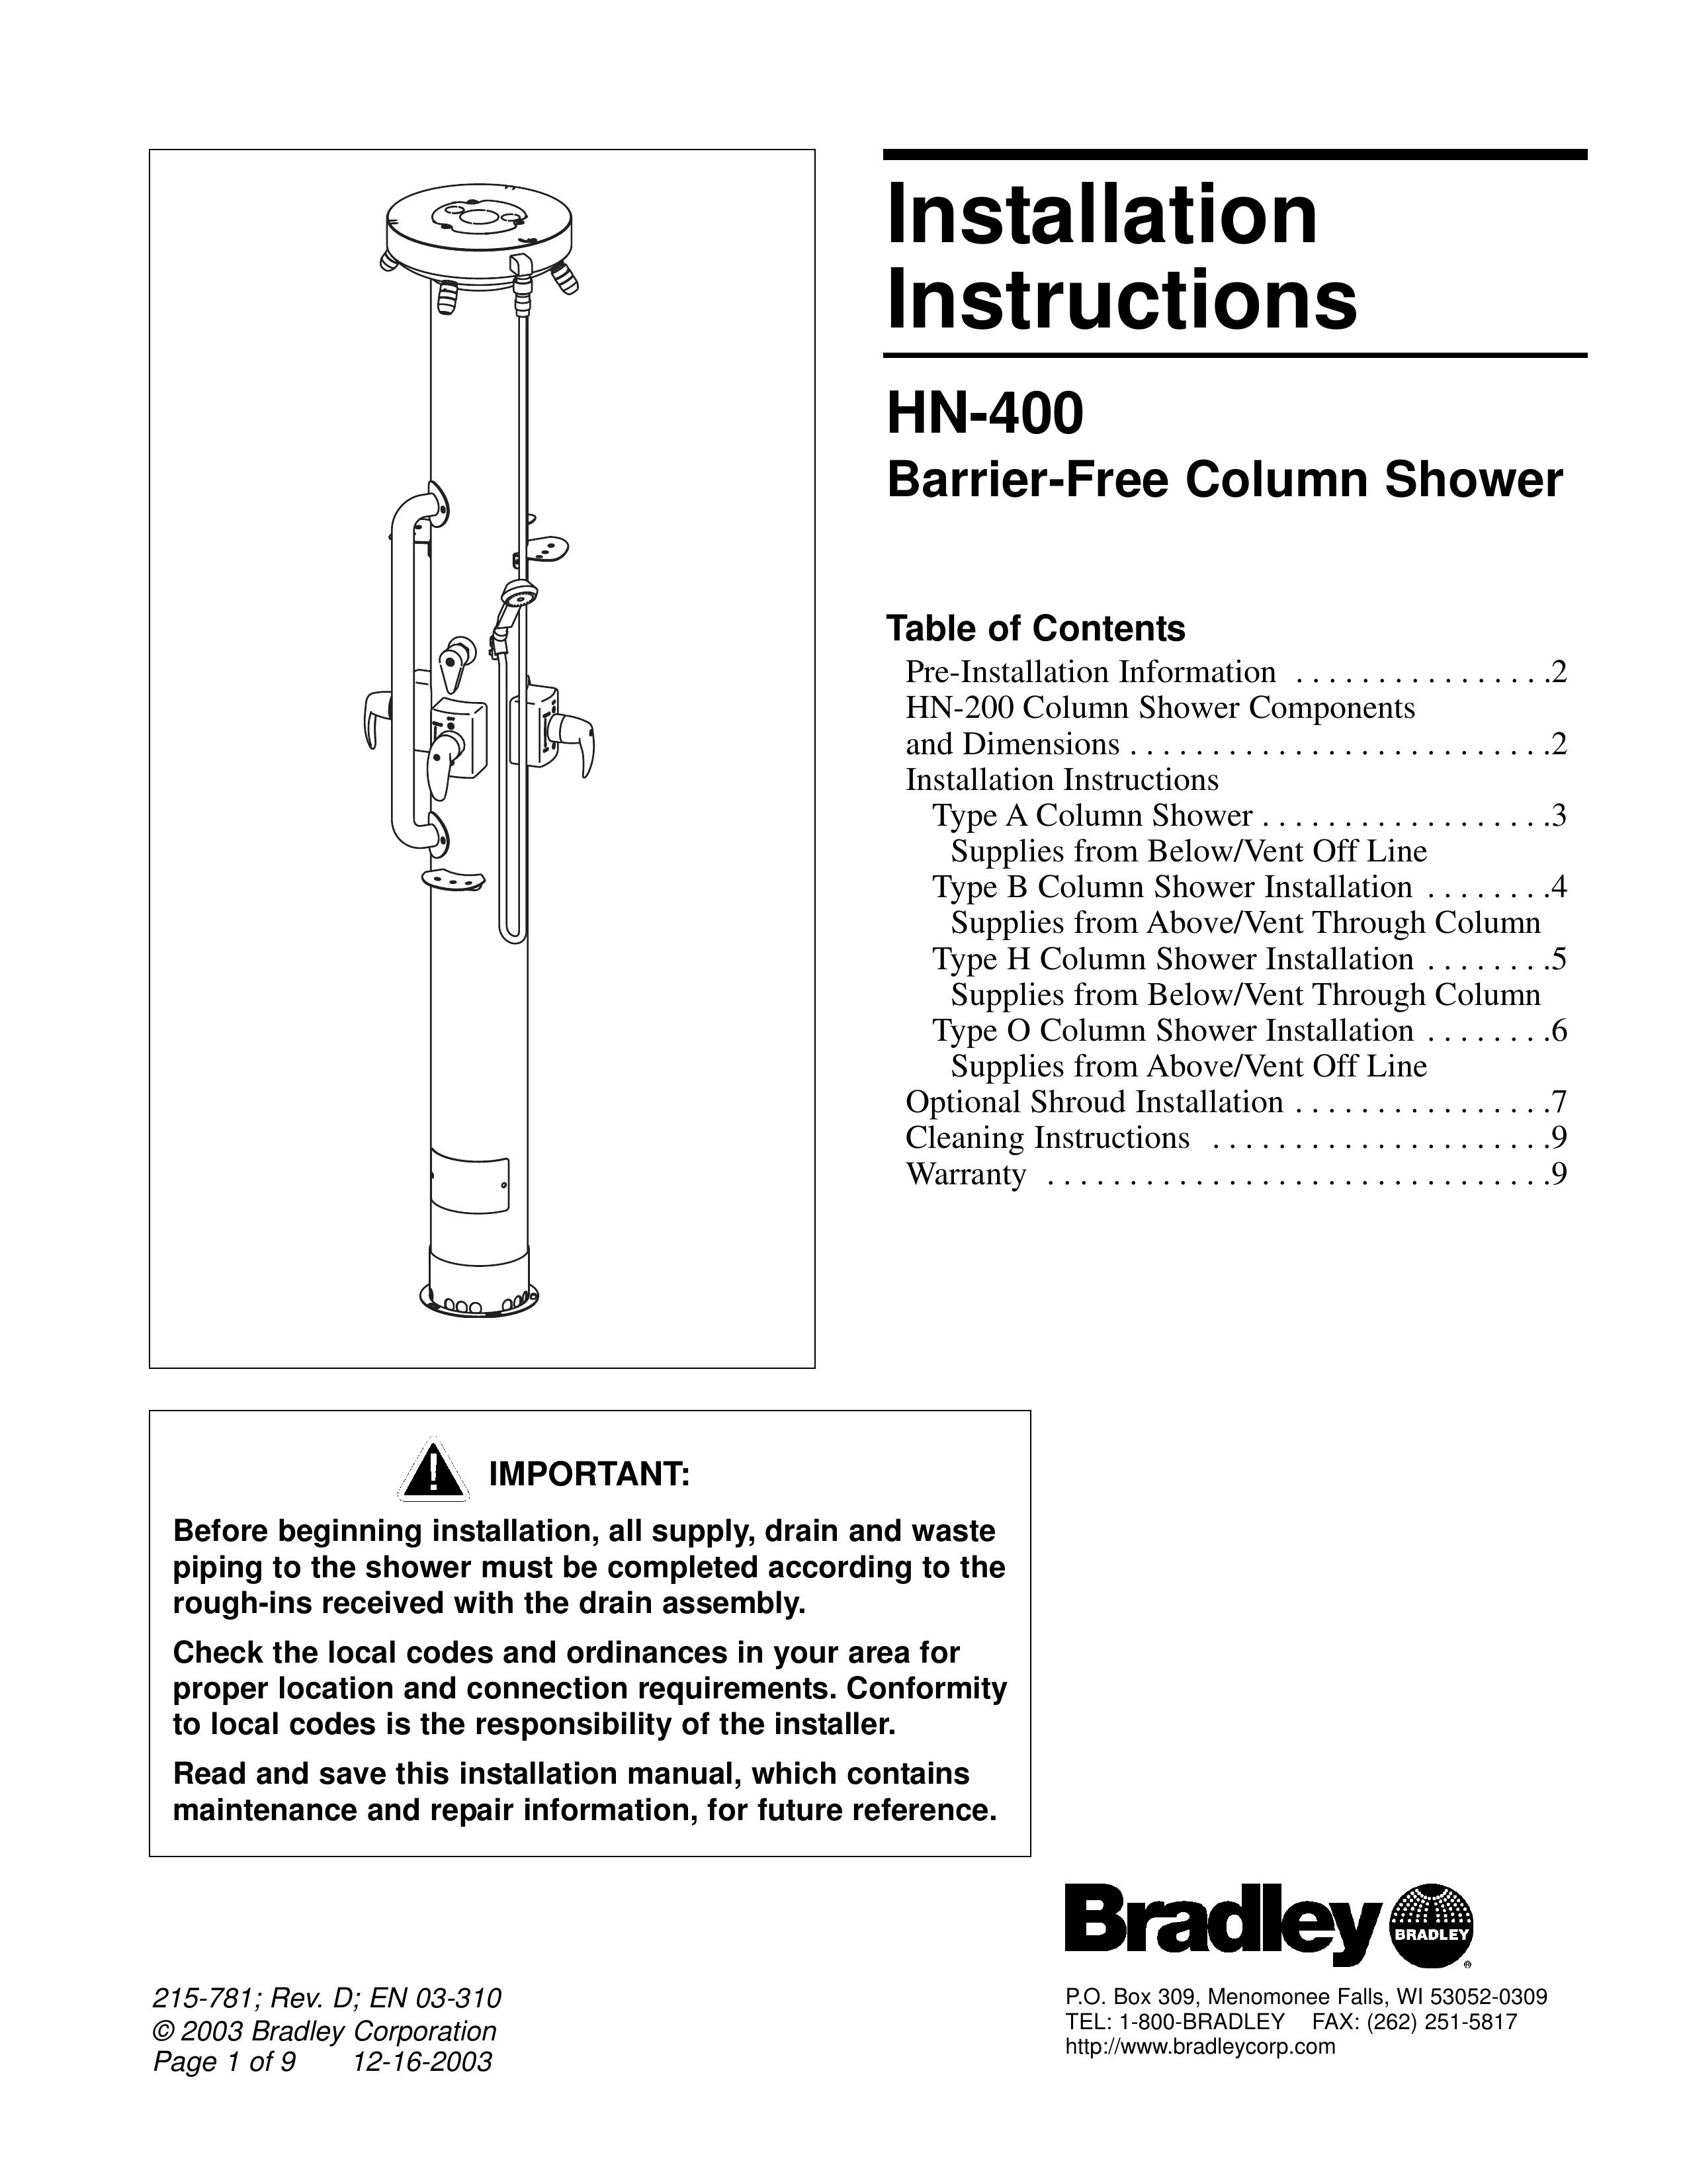 Bradley Smoker HN-400 Outdoor Shower User Manual